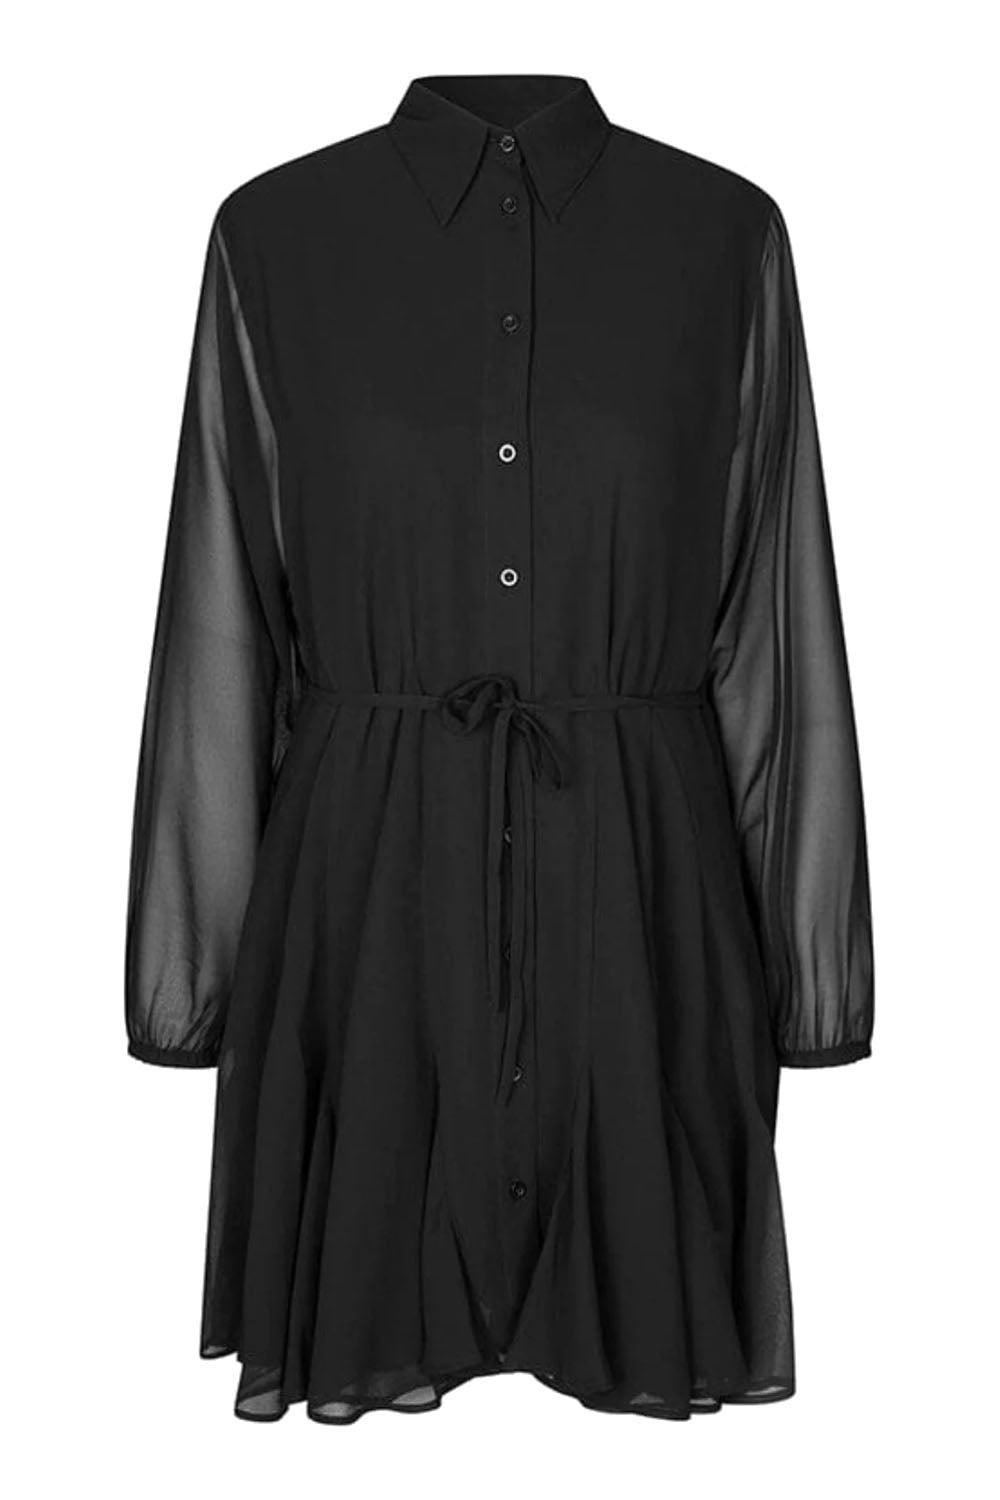 Lavey-M jett dress Black